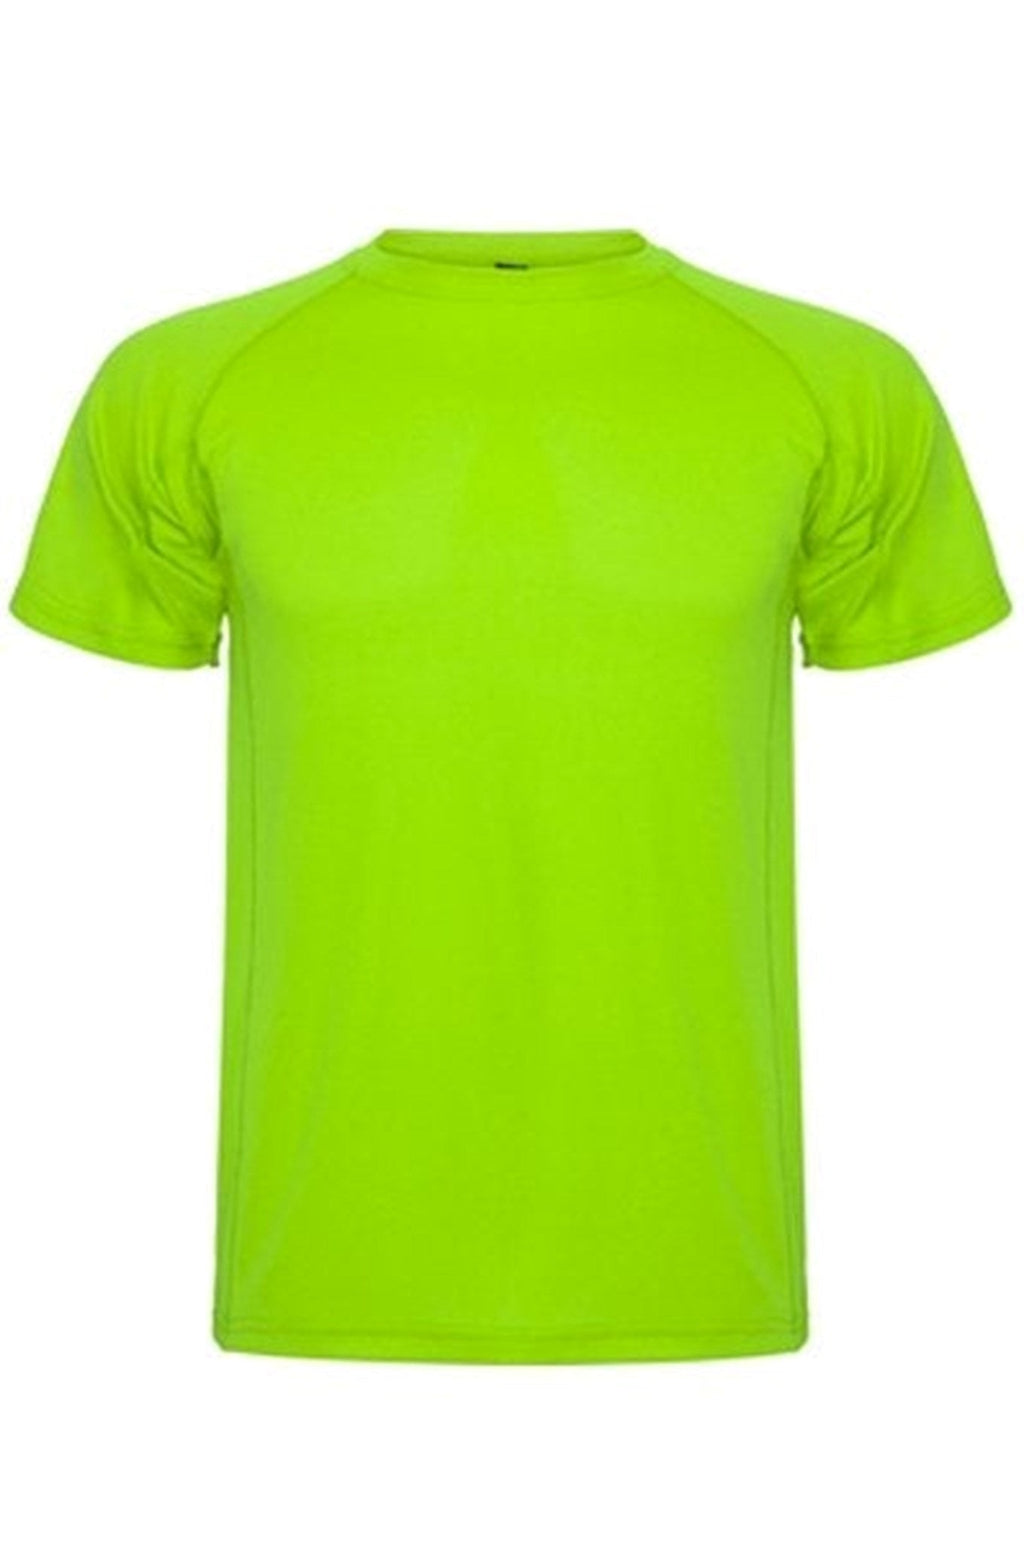 Training T-shirt - Lime Green